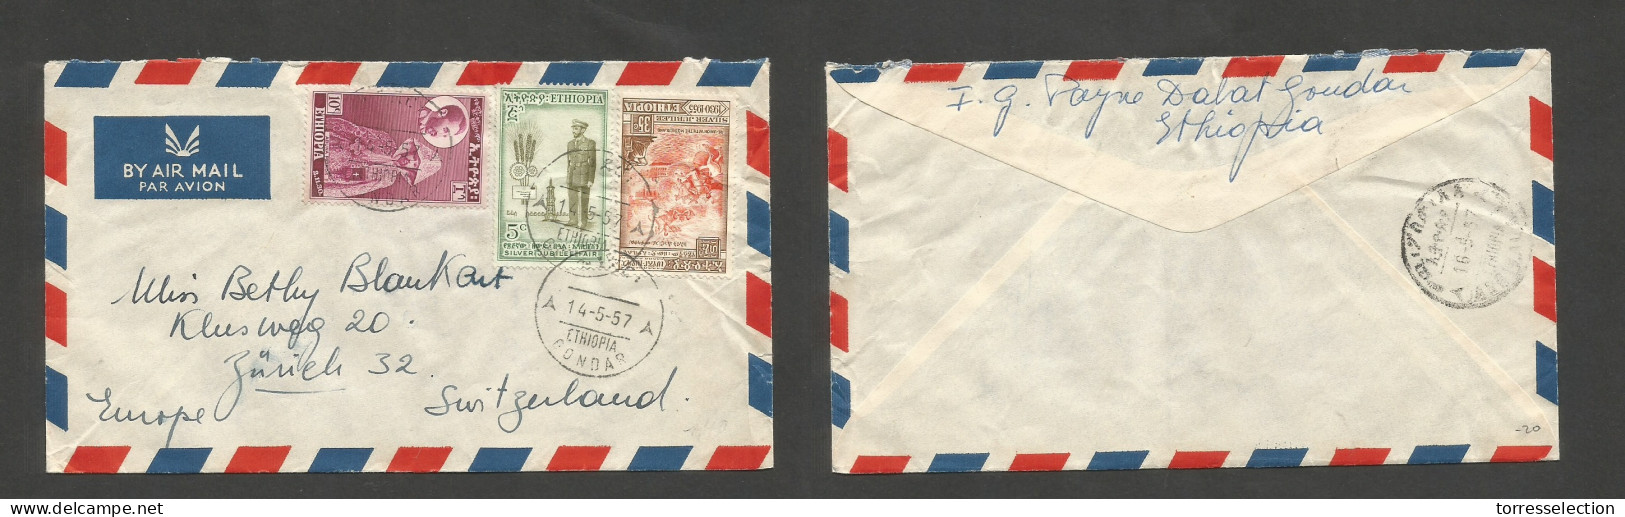 ETHIOPIA. 1957 (14 May) Gondar - Switzerland, Zurich. Air Multifkd Mixed Issues Envelope, Tied Cds. VF. SALE. - Ethiopia